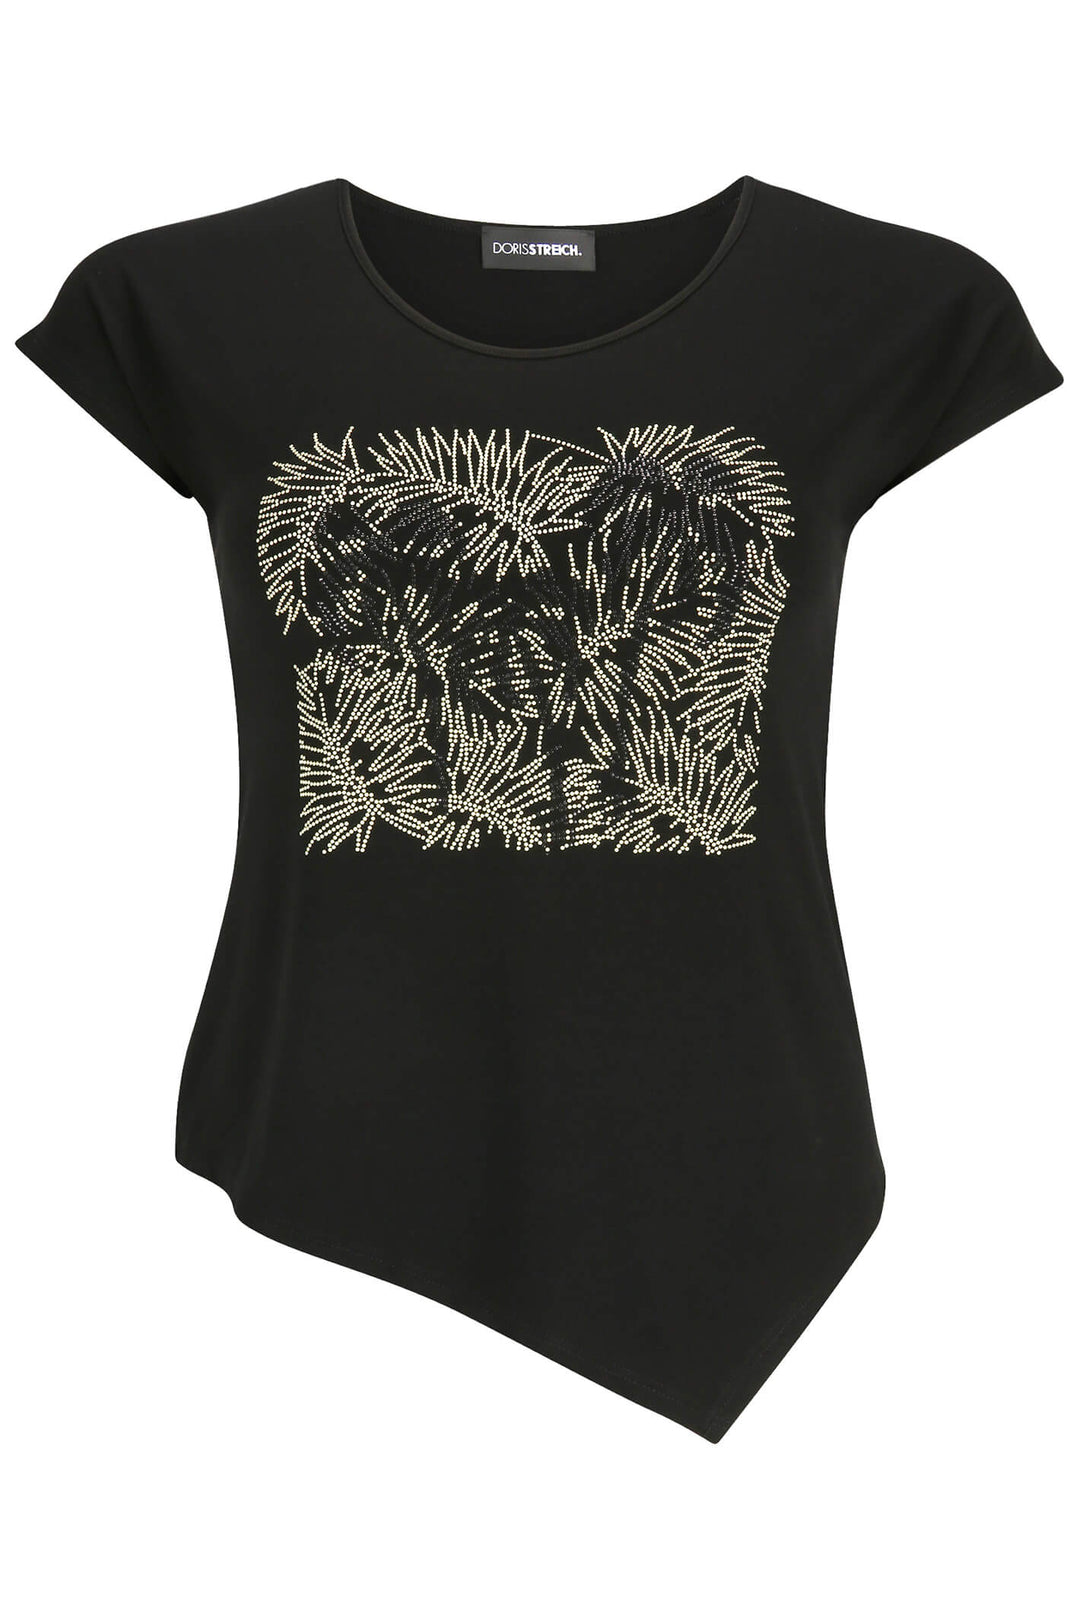 Doris Streich  537 270 Black Asymmetric Print Beaded T-Shirt - Shirley Allum Boutique